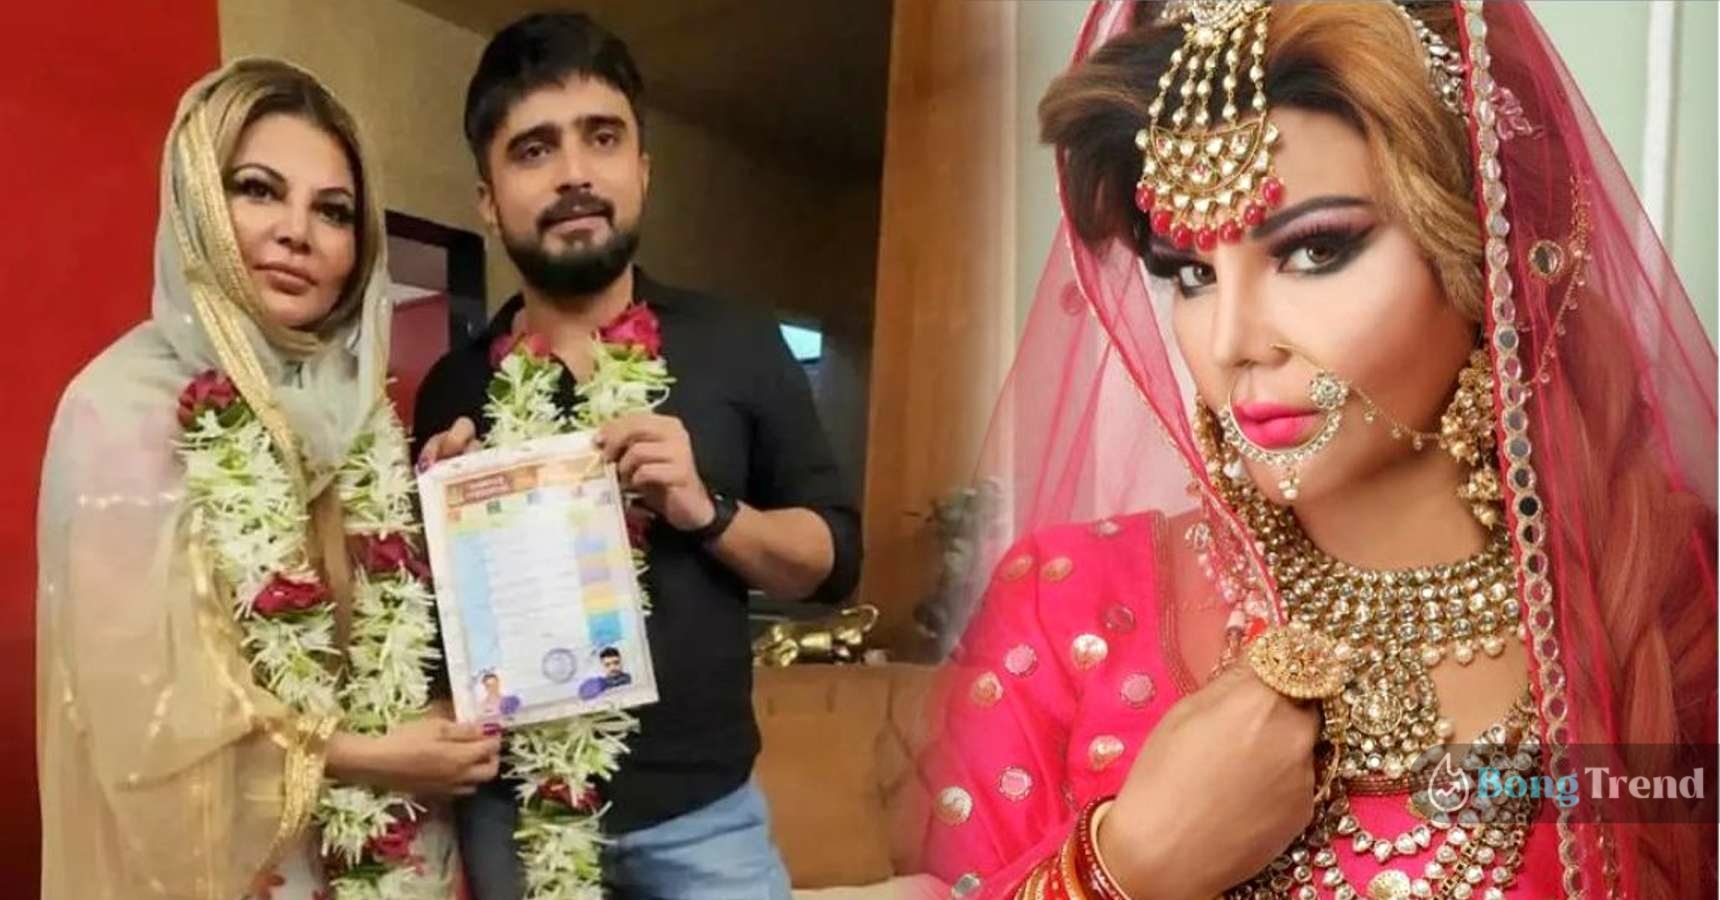 Rakhi Sawant wedding with boyfriend Adil Photo Viral on Social Media